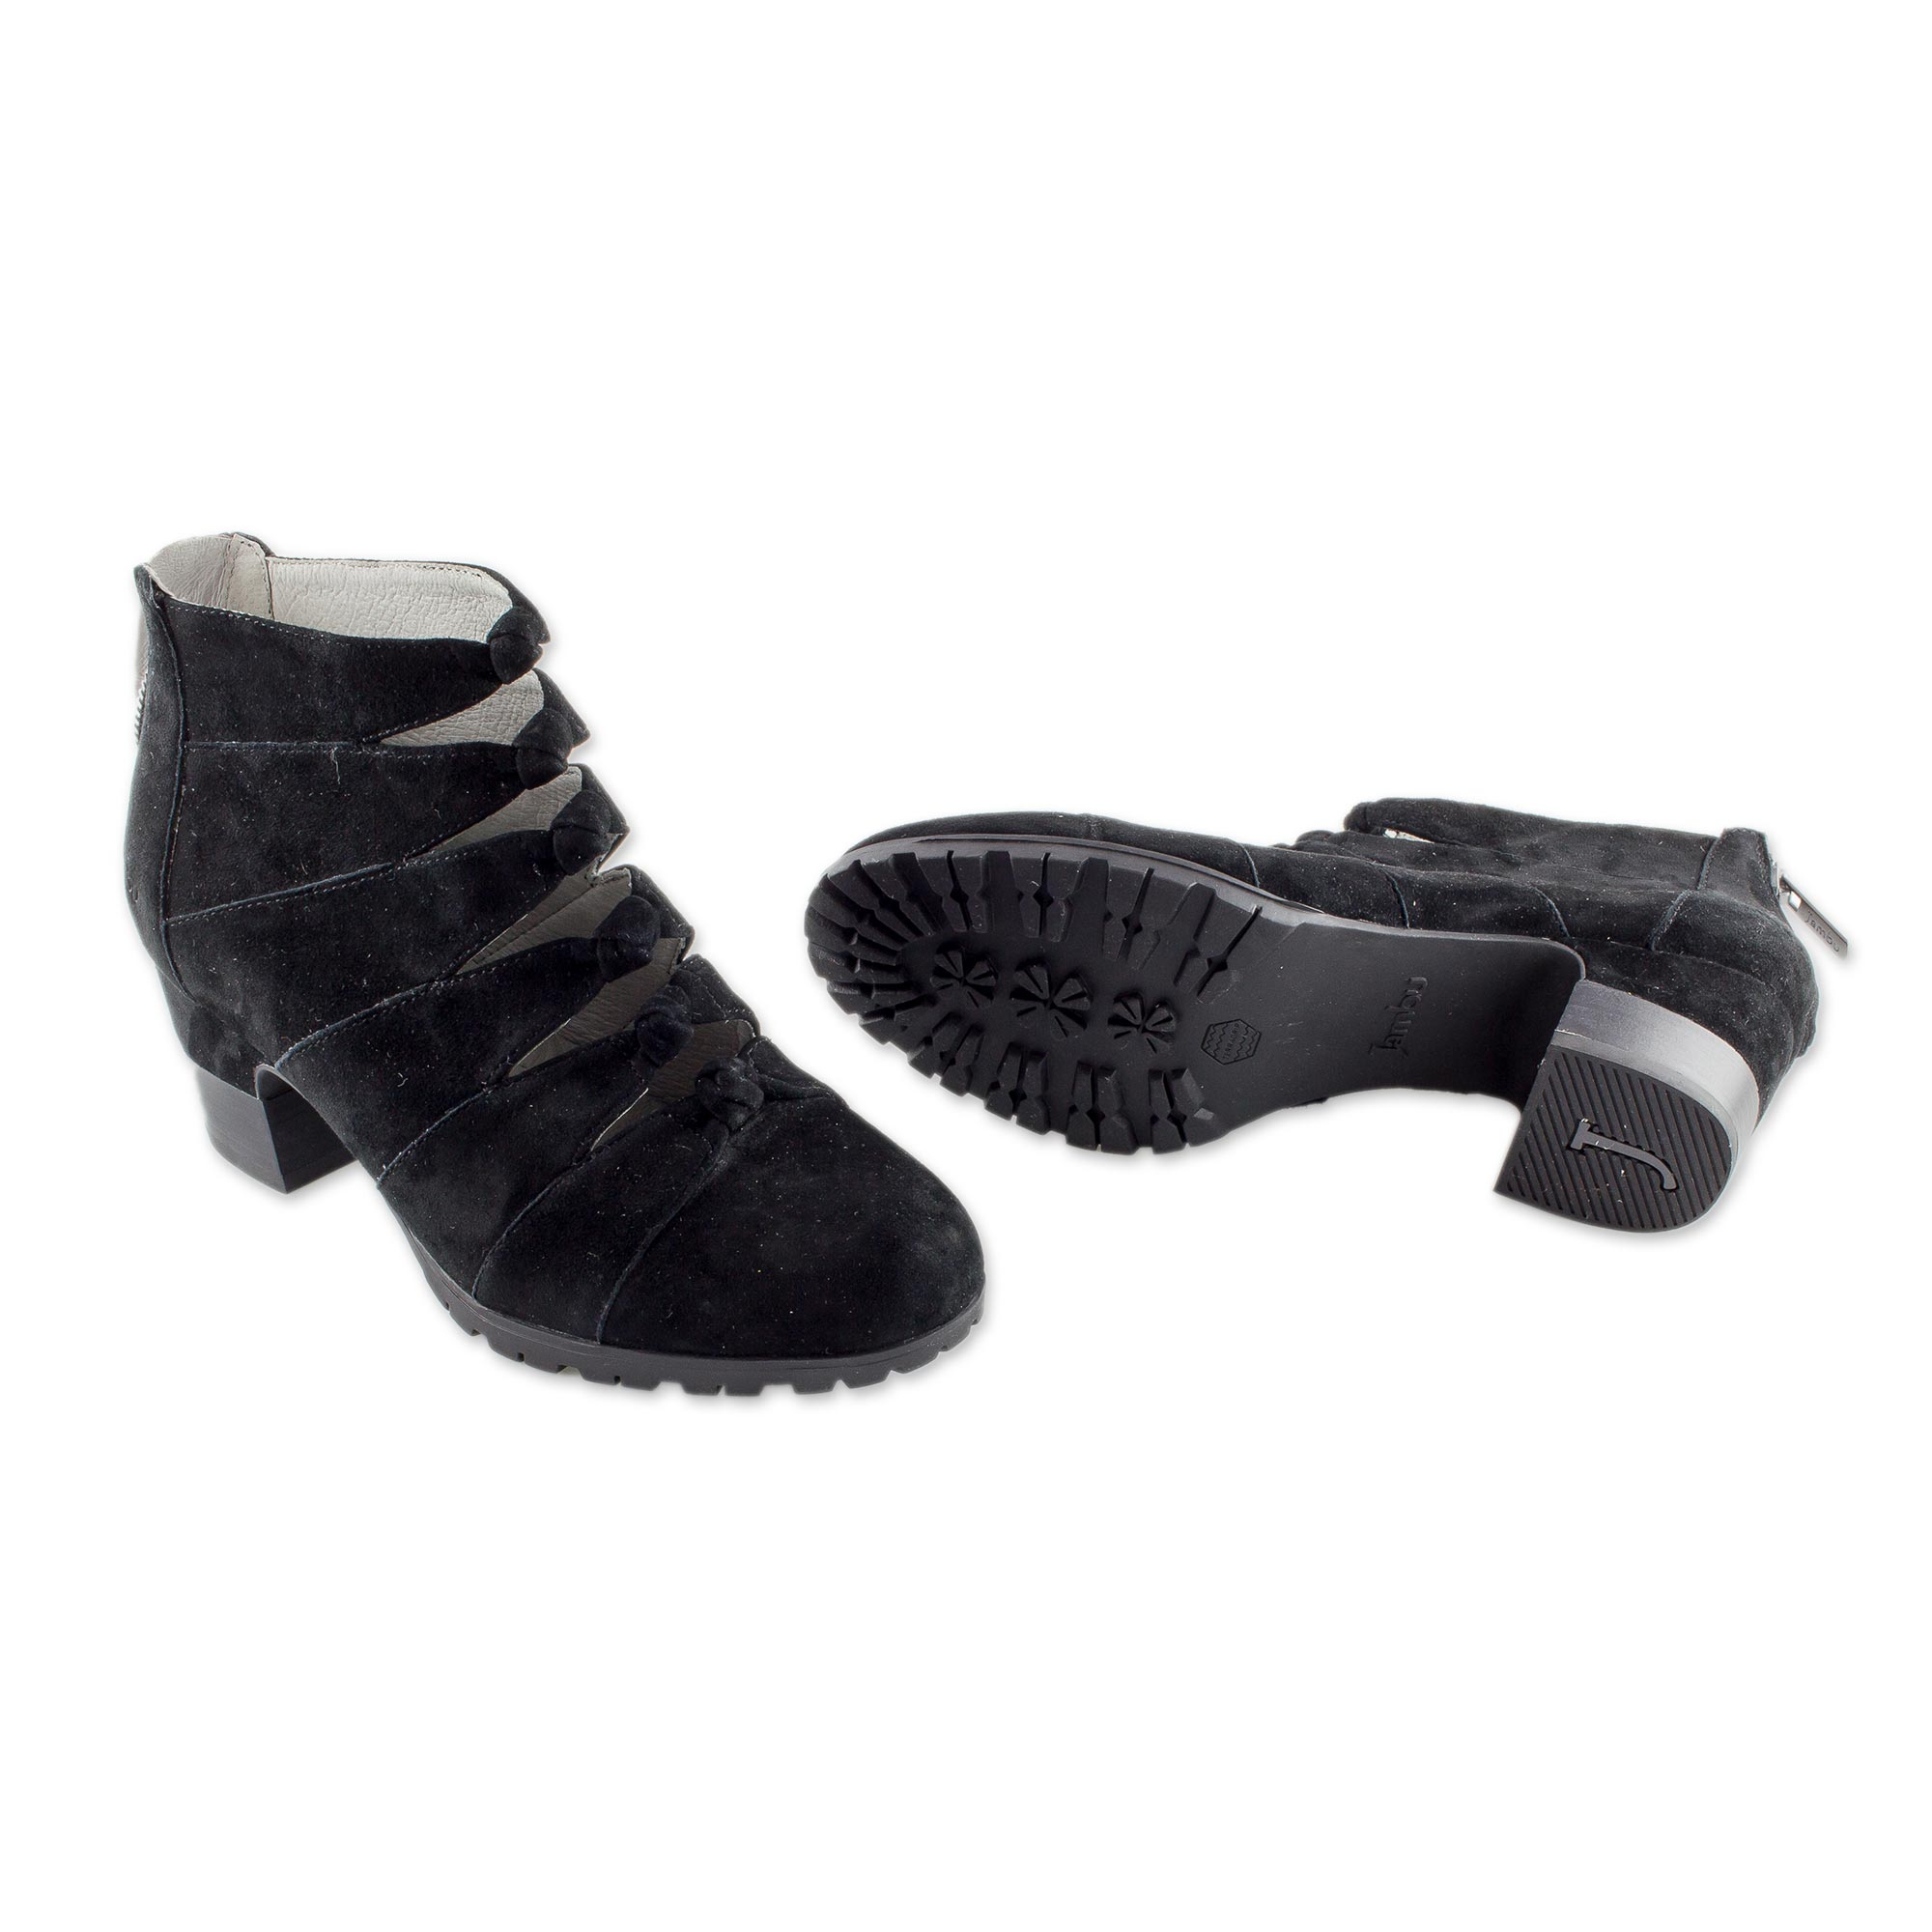 Stylish Jambu Nubuck Ankle Boot - Parallels | NOVICA